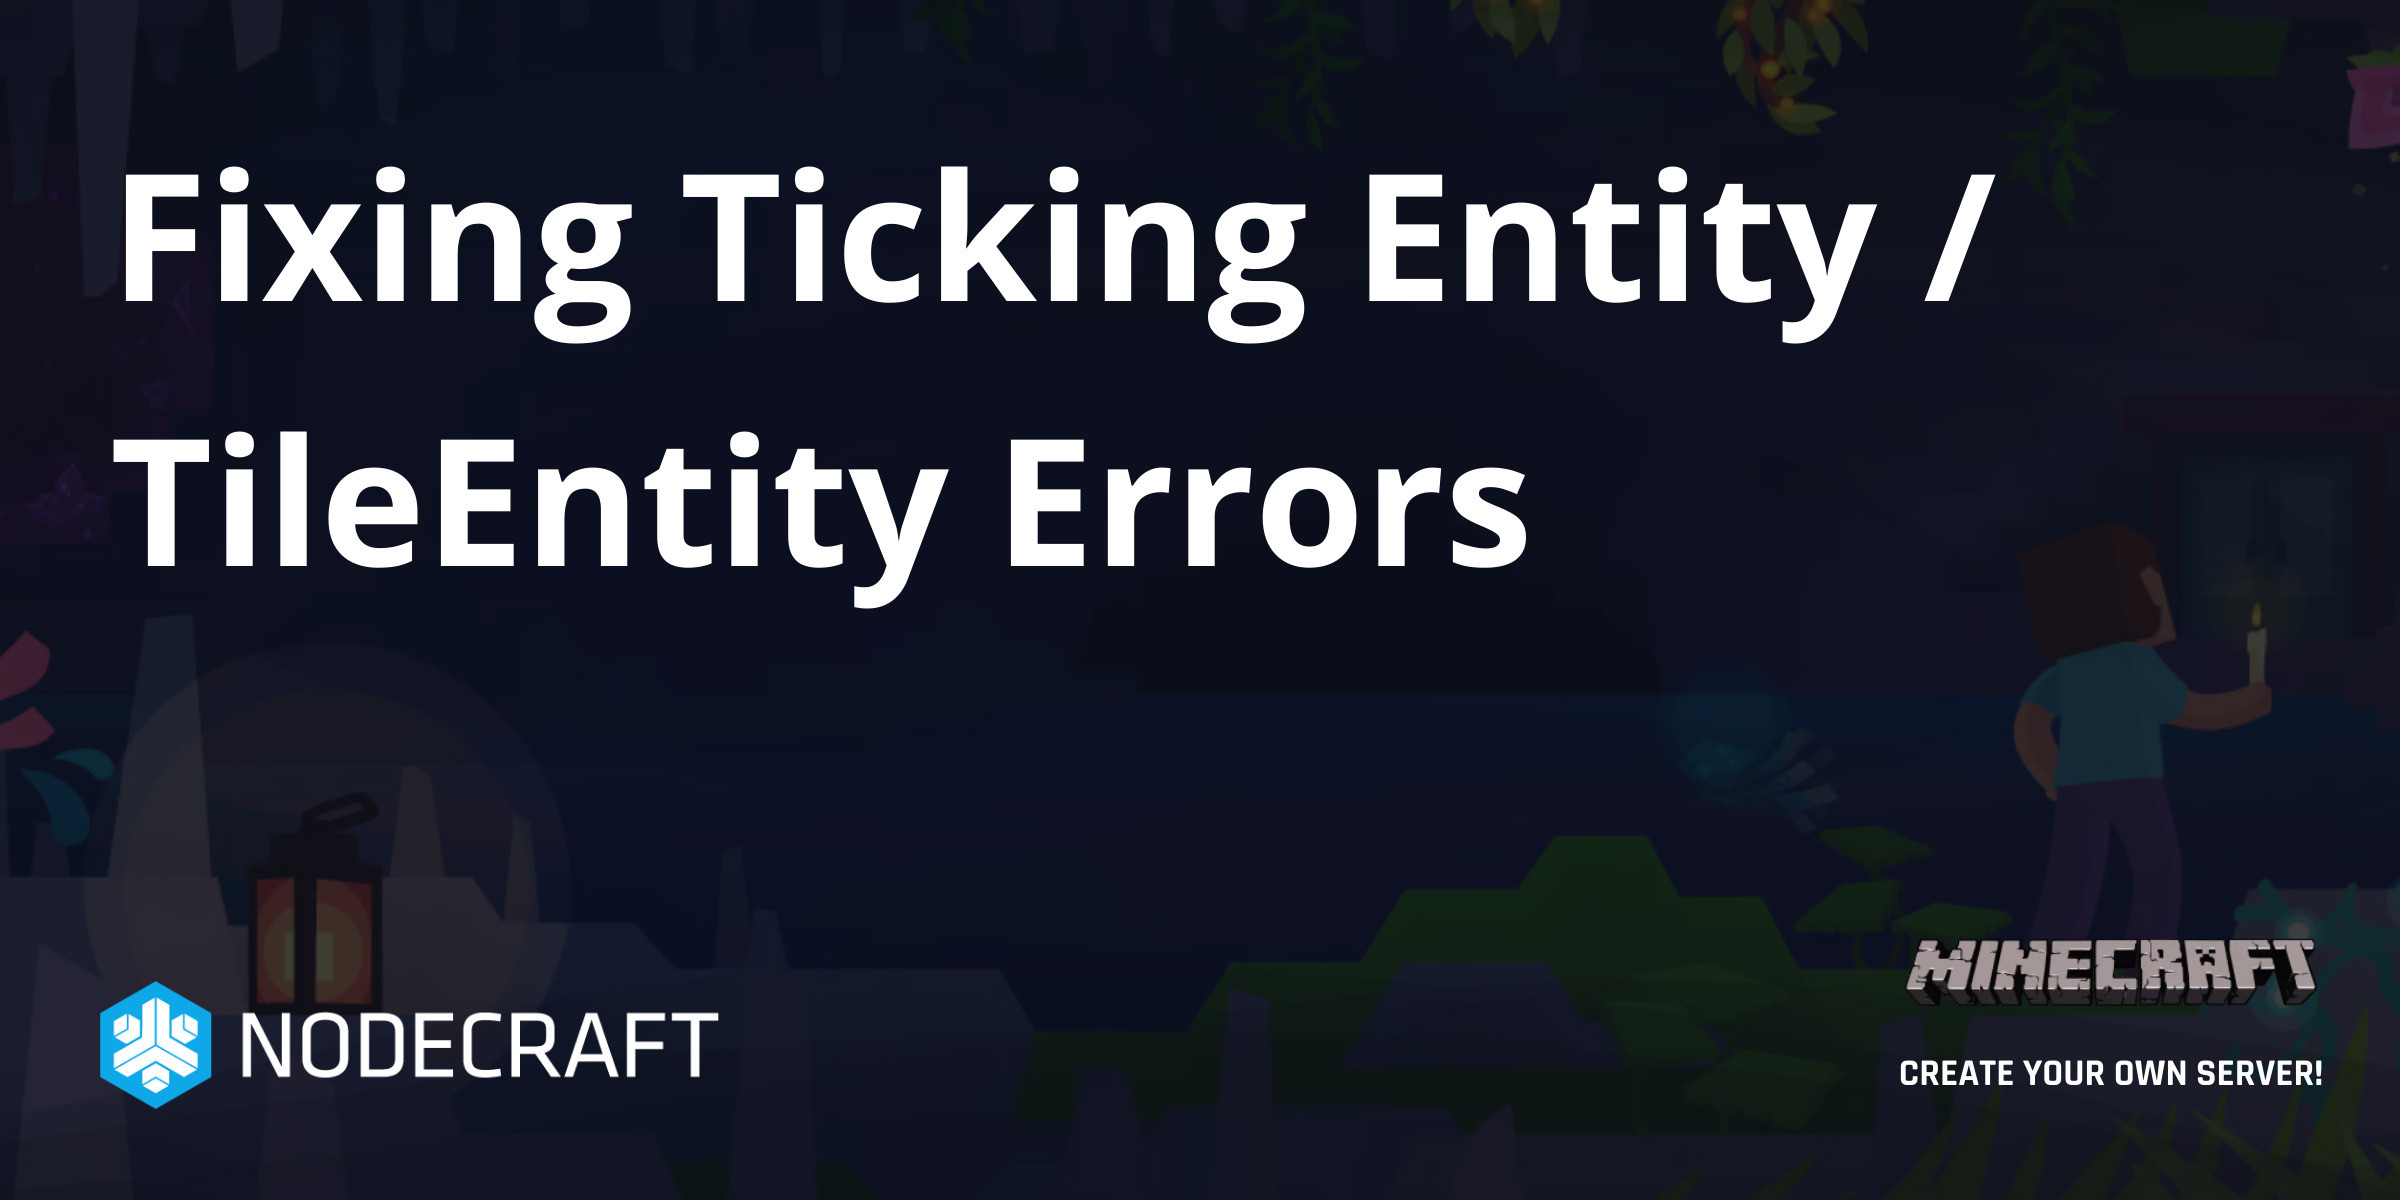 Fixing Ticking Entity Tileentity Errors Minecraft Knowledgebase Article Nodecraft